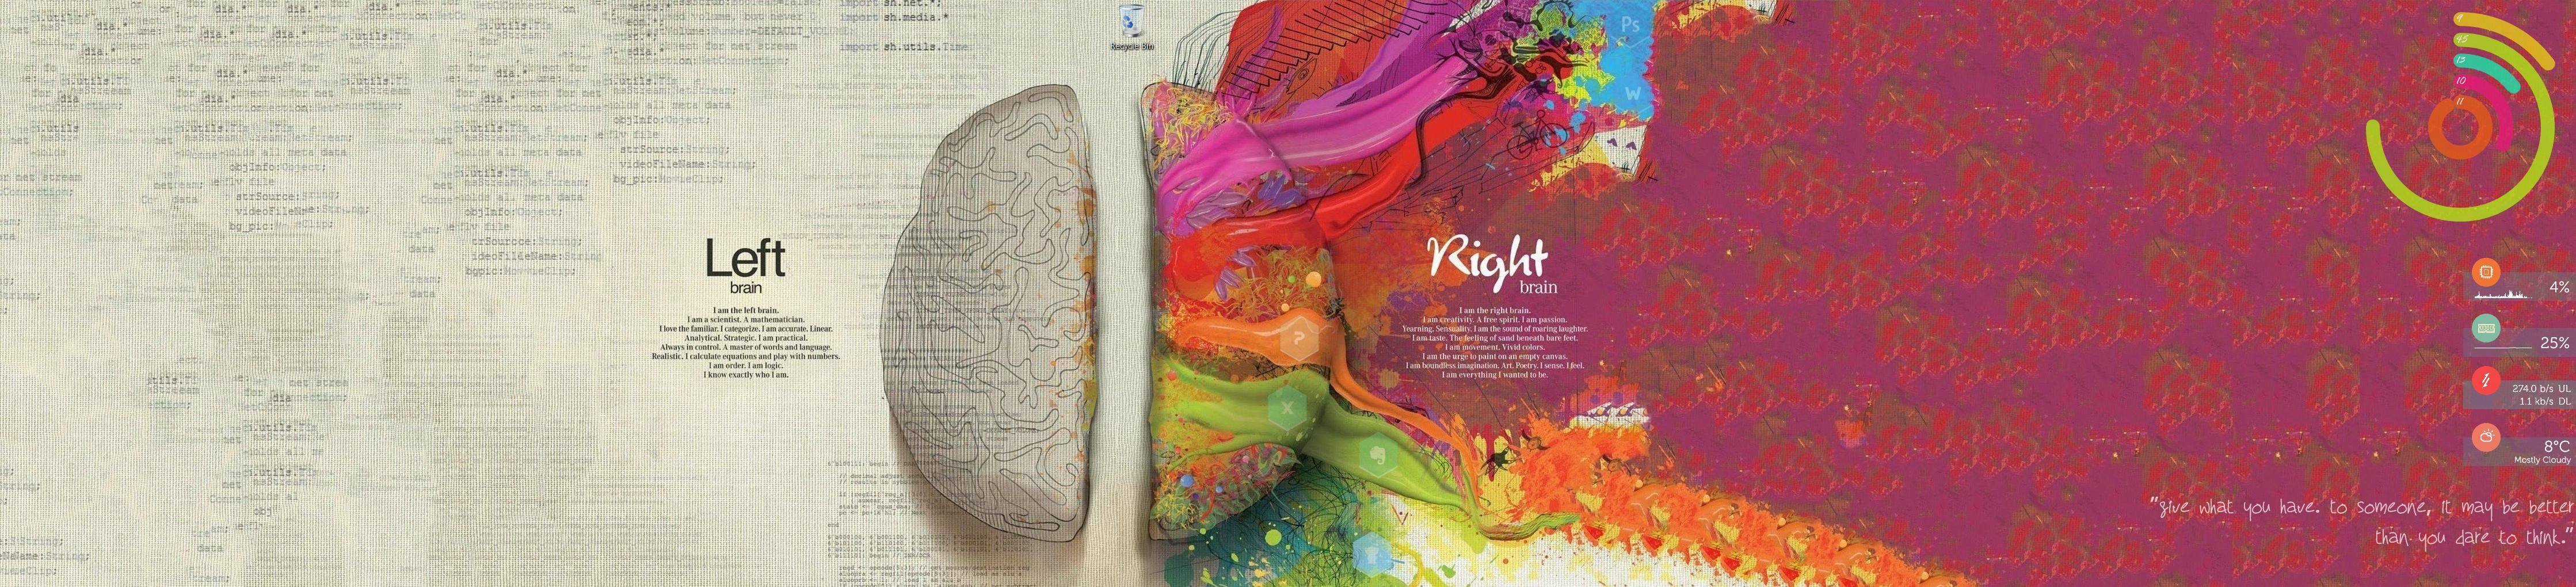 74 Left Brain Right Brain Wallpaper On Wallpapersafari